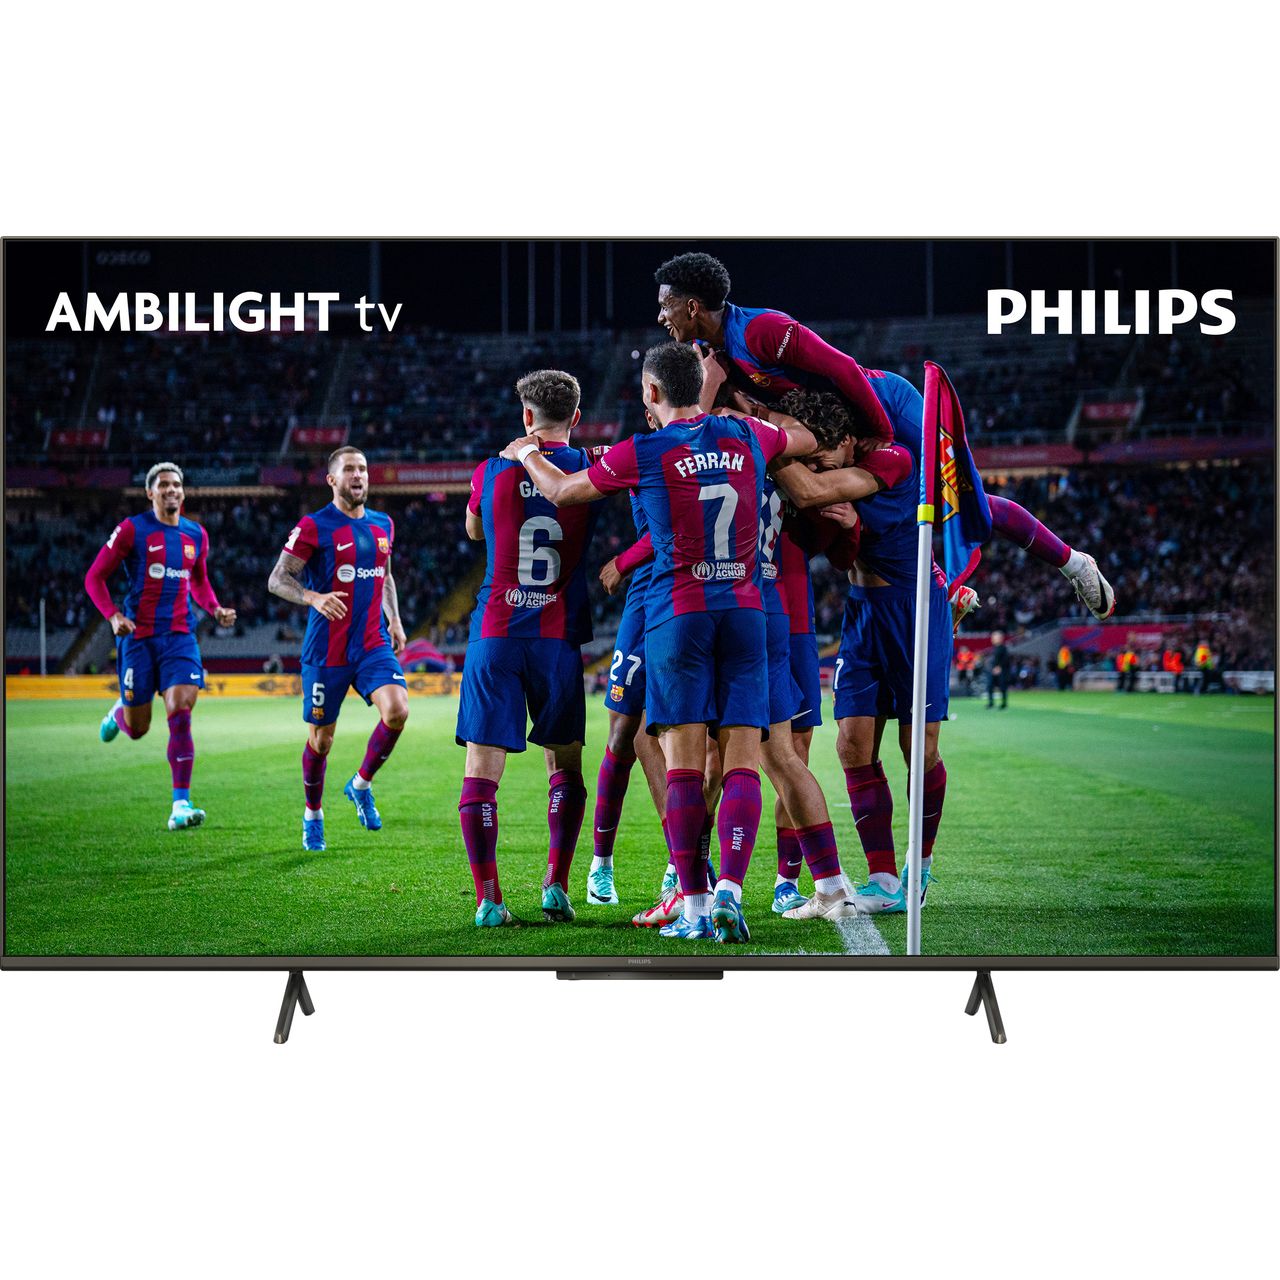 Philips 8100 Series 4K Smart TV, 43PUS8108